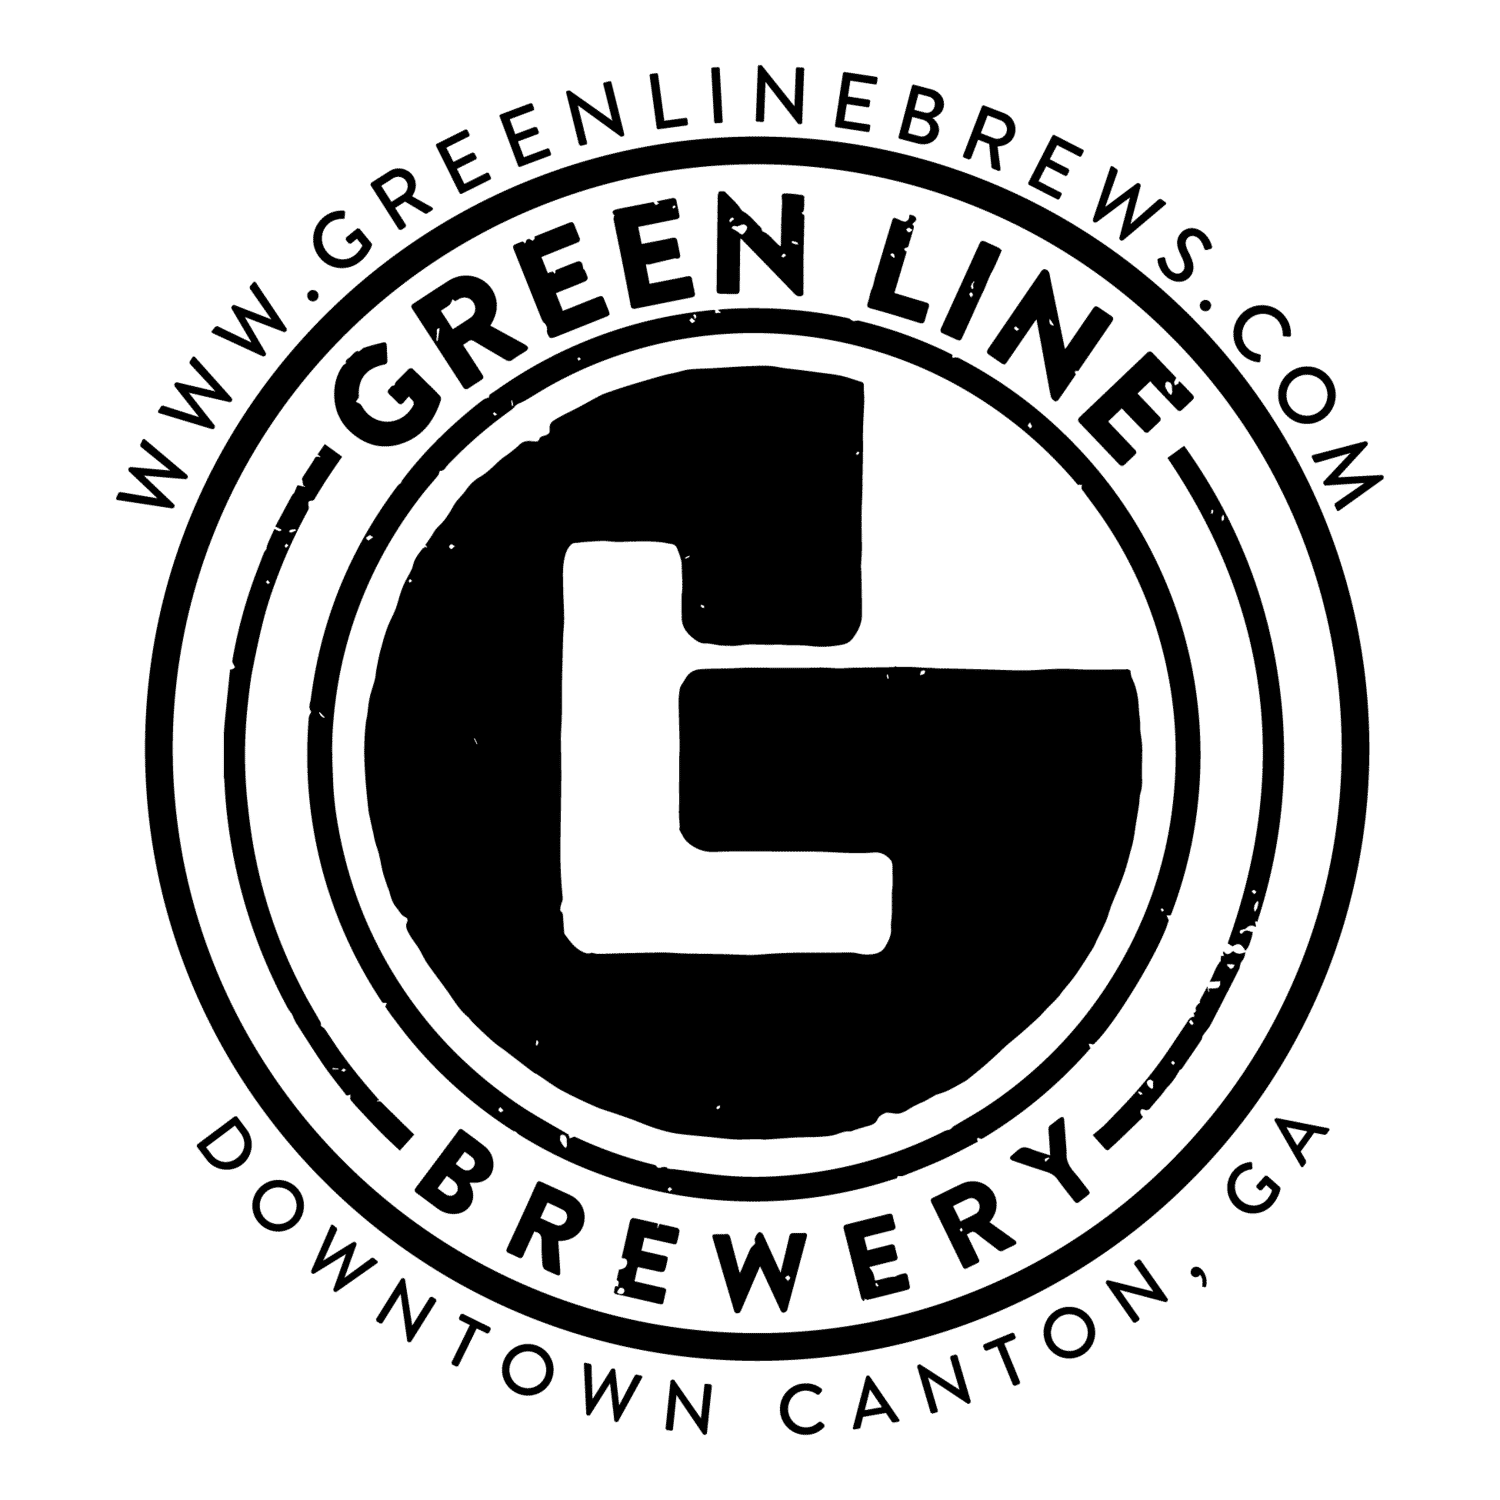 Green Line Brewery